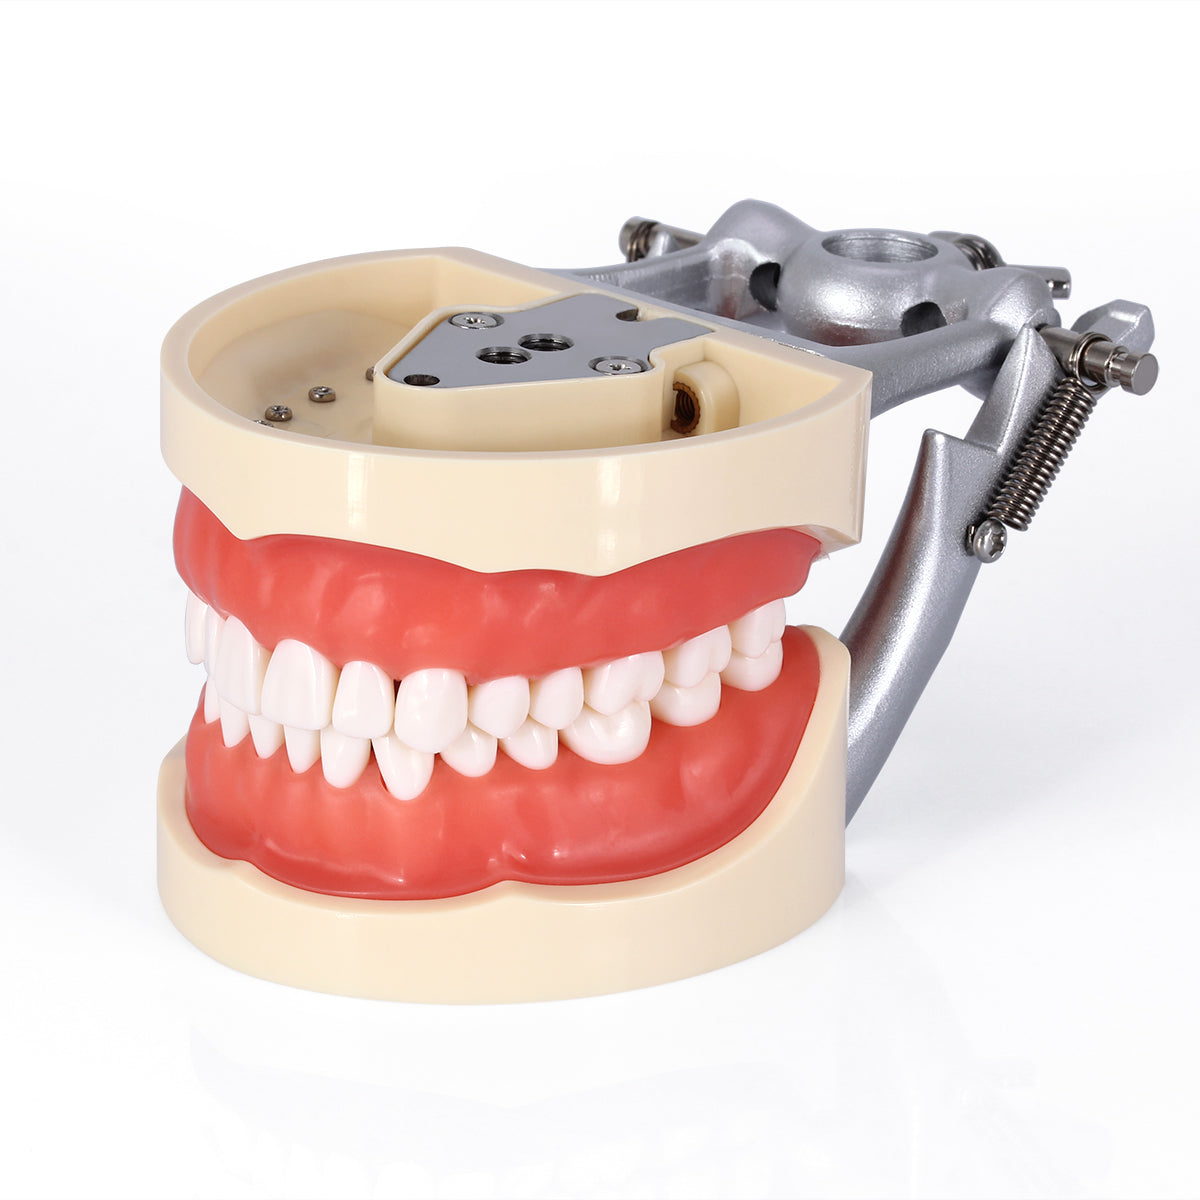 Dental Teeth Model With Removable Teeth